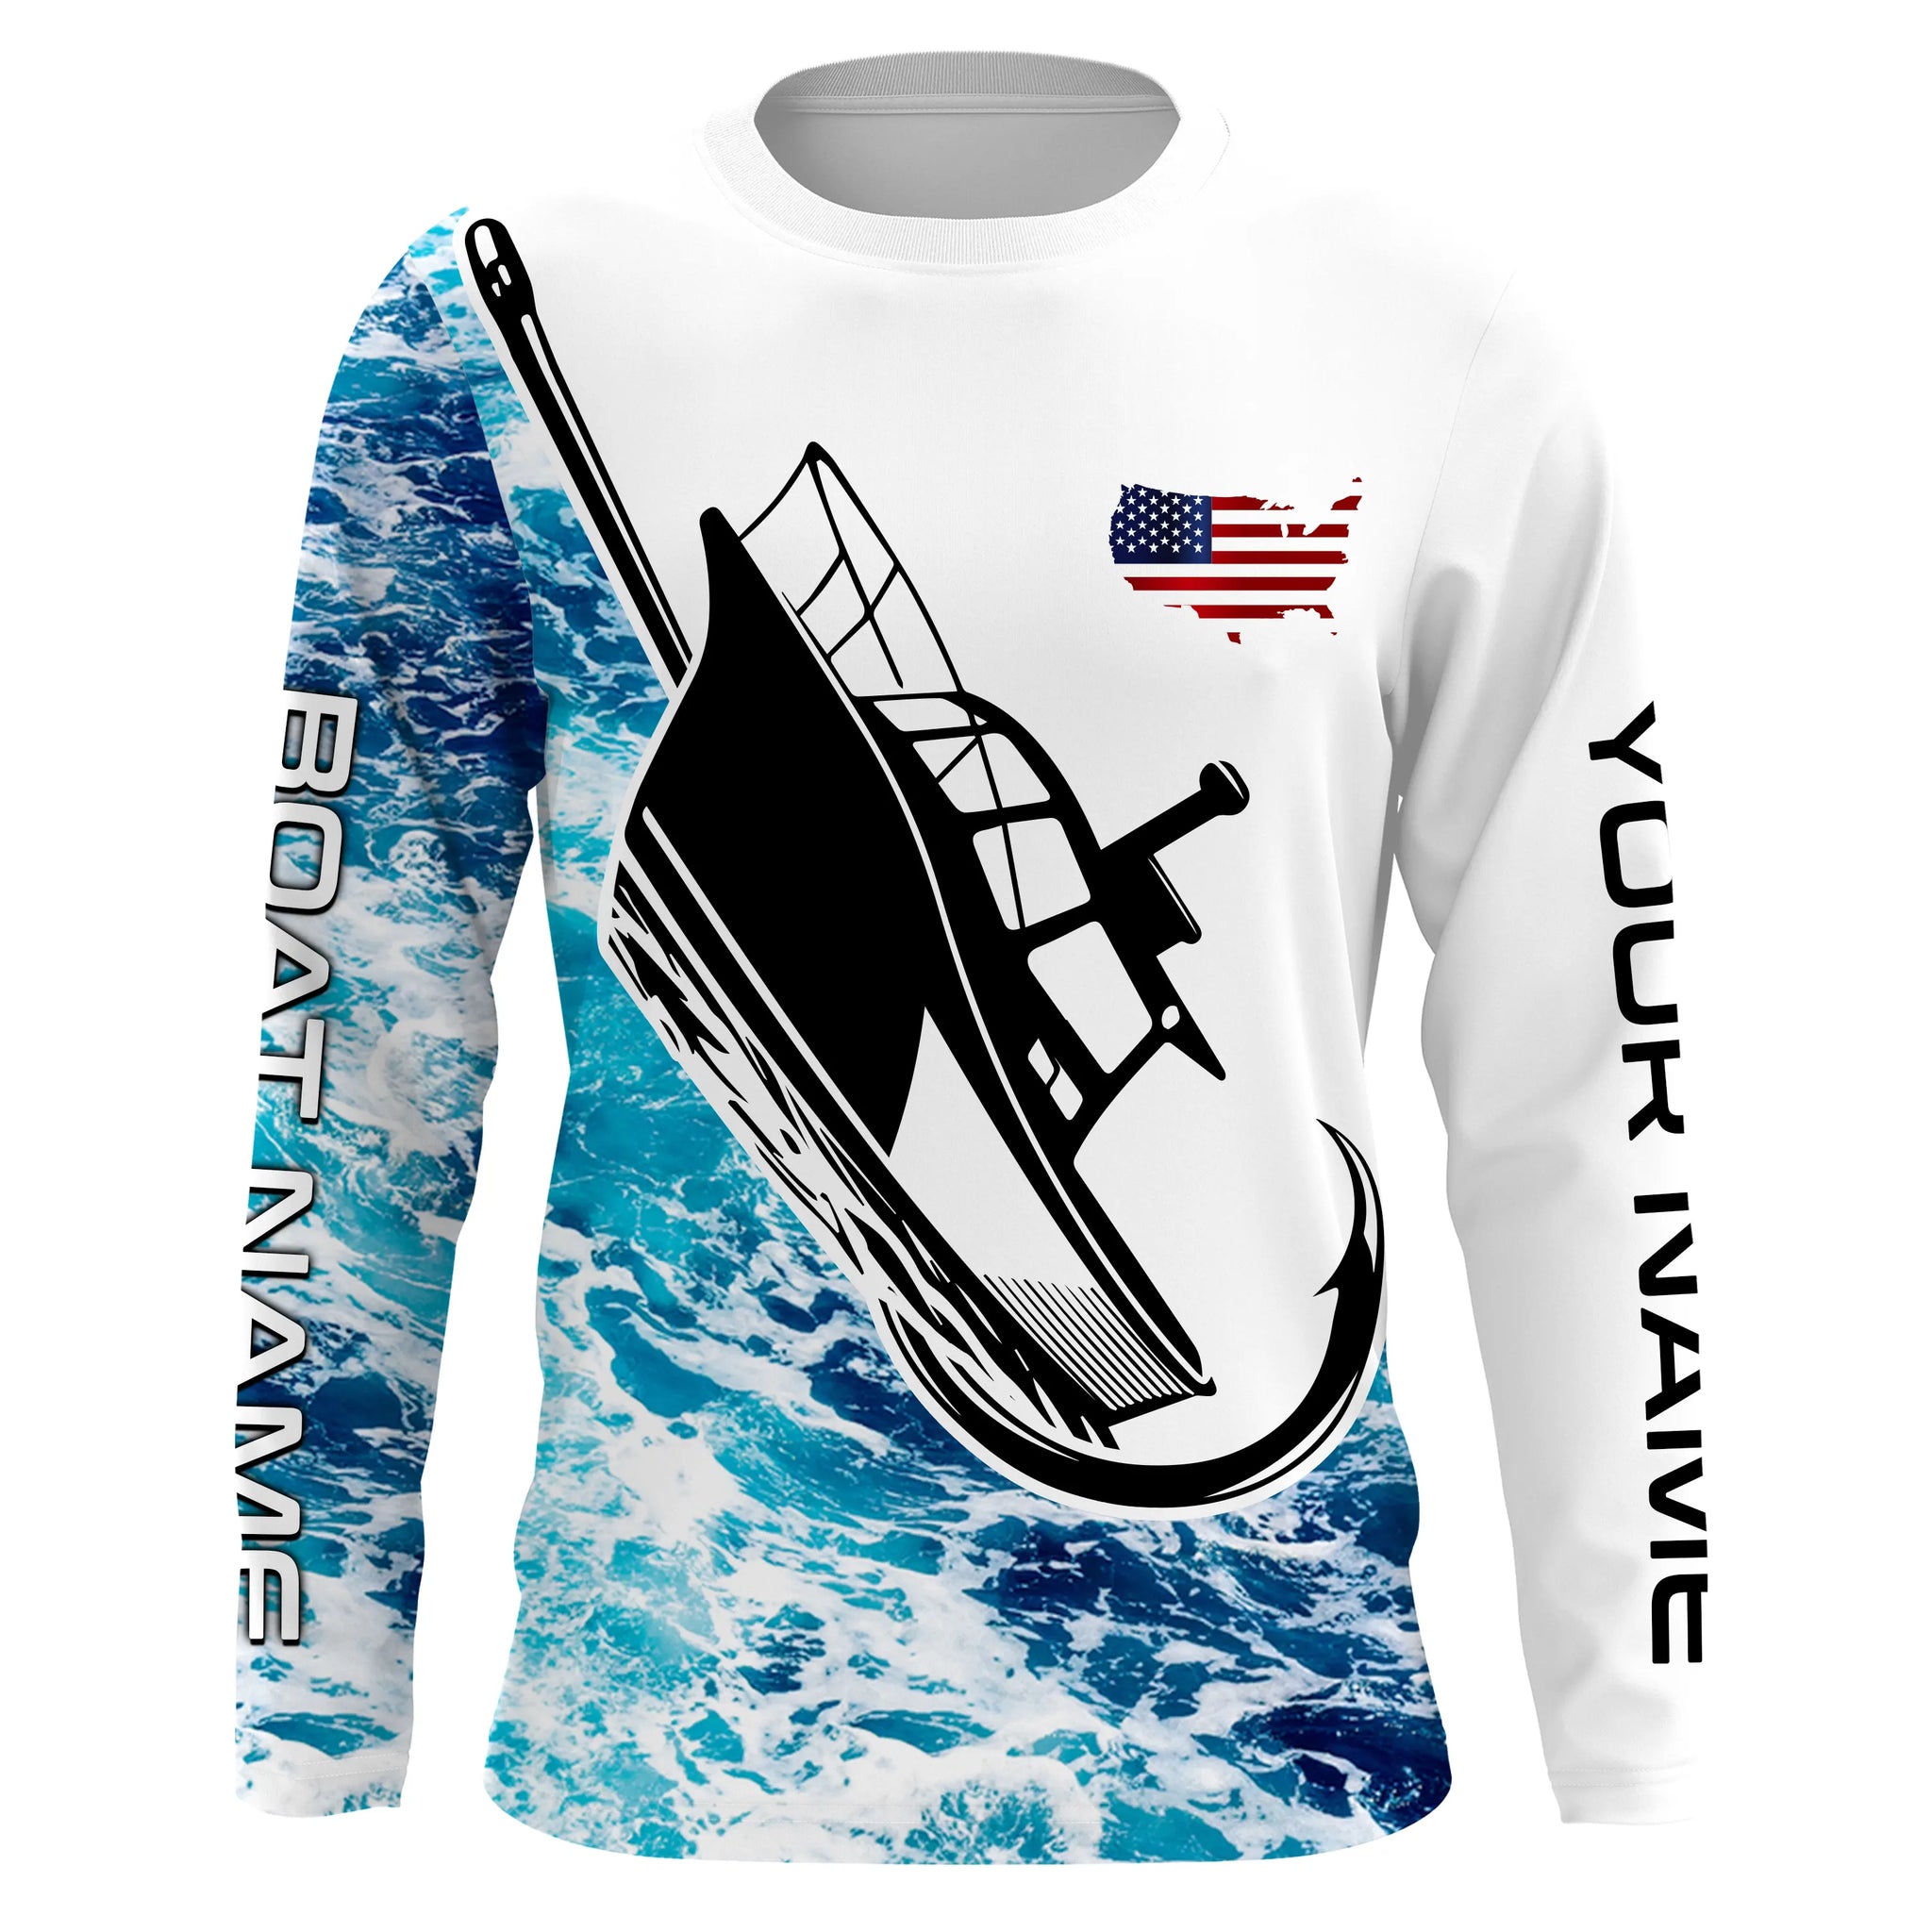 Custom Deep Sea Fishing Shirts with Boat Name, American Flag Saltwater Fishing Shirts IPHW4361 Long Sleeves UPF / M